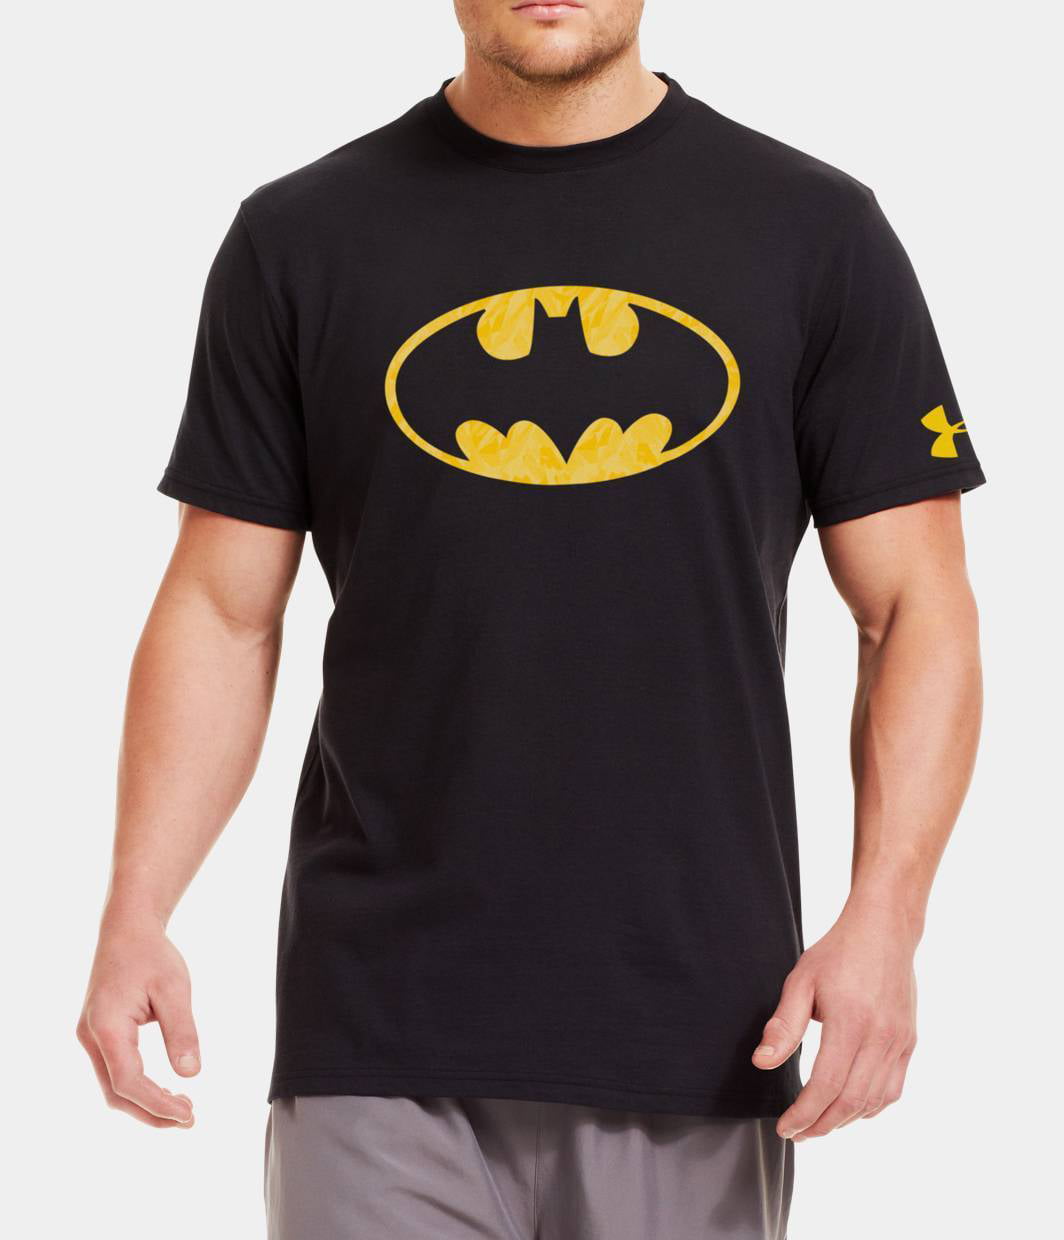 Batman Mens Crimson Knight Classic T-shirt Large Black